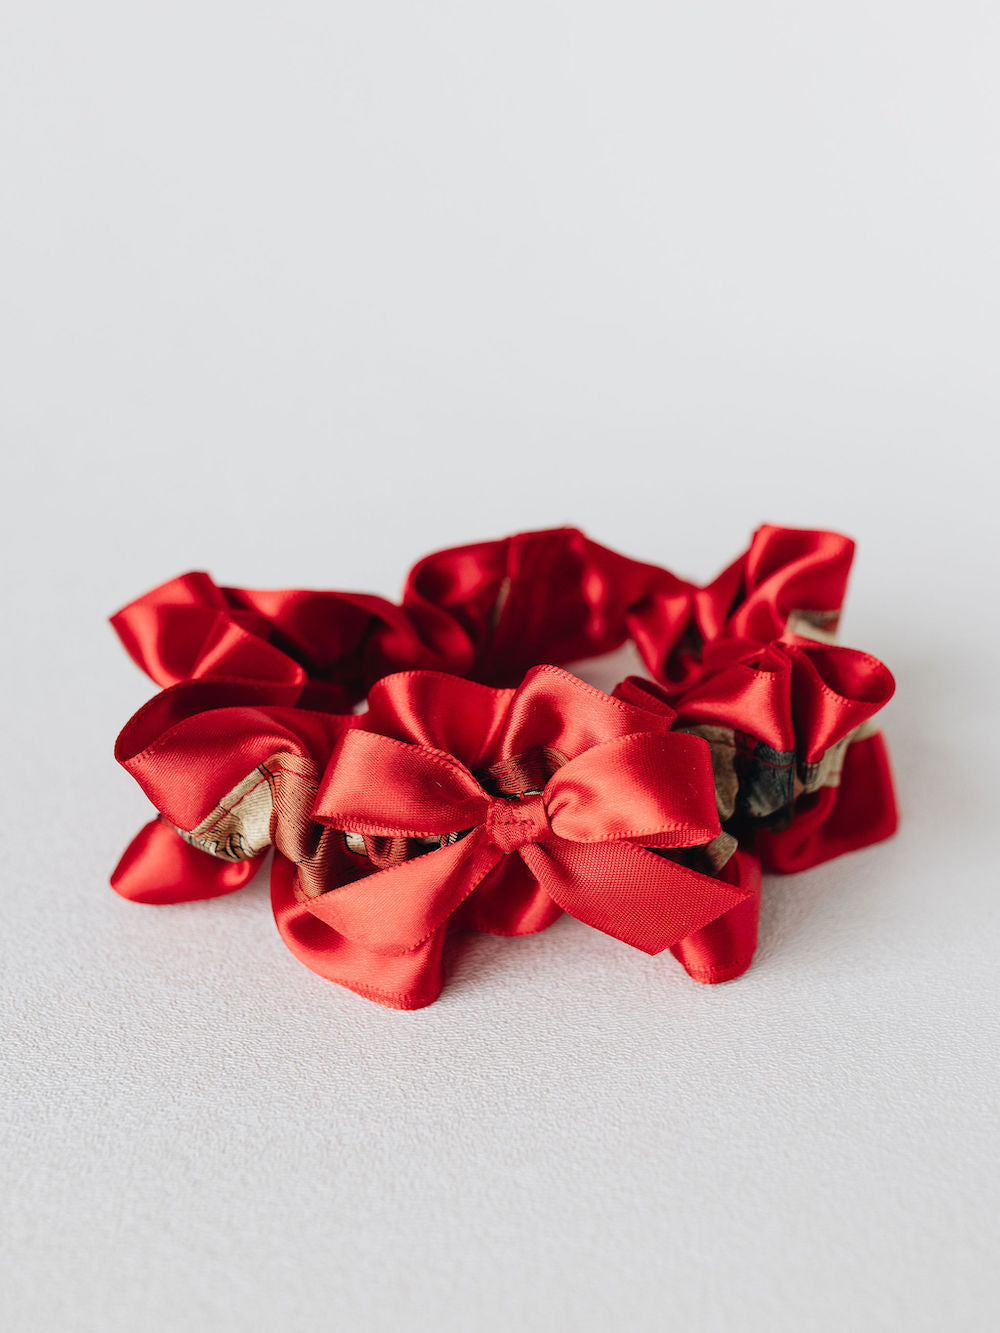 custom main red satin heirloom wedding garter from set handmade from fathers tie by The Garter Girl